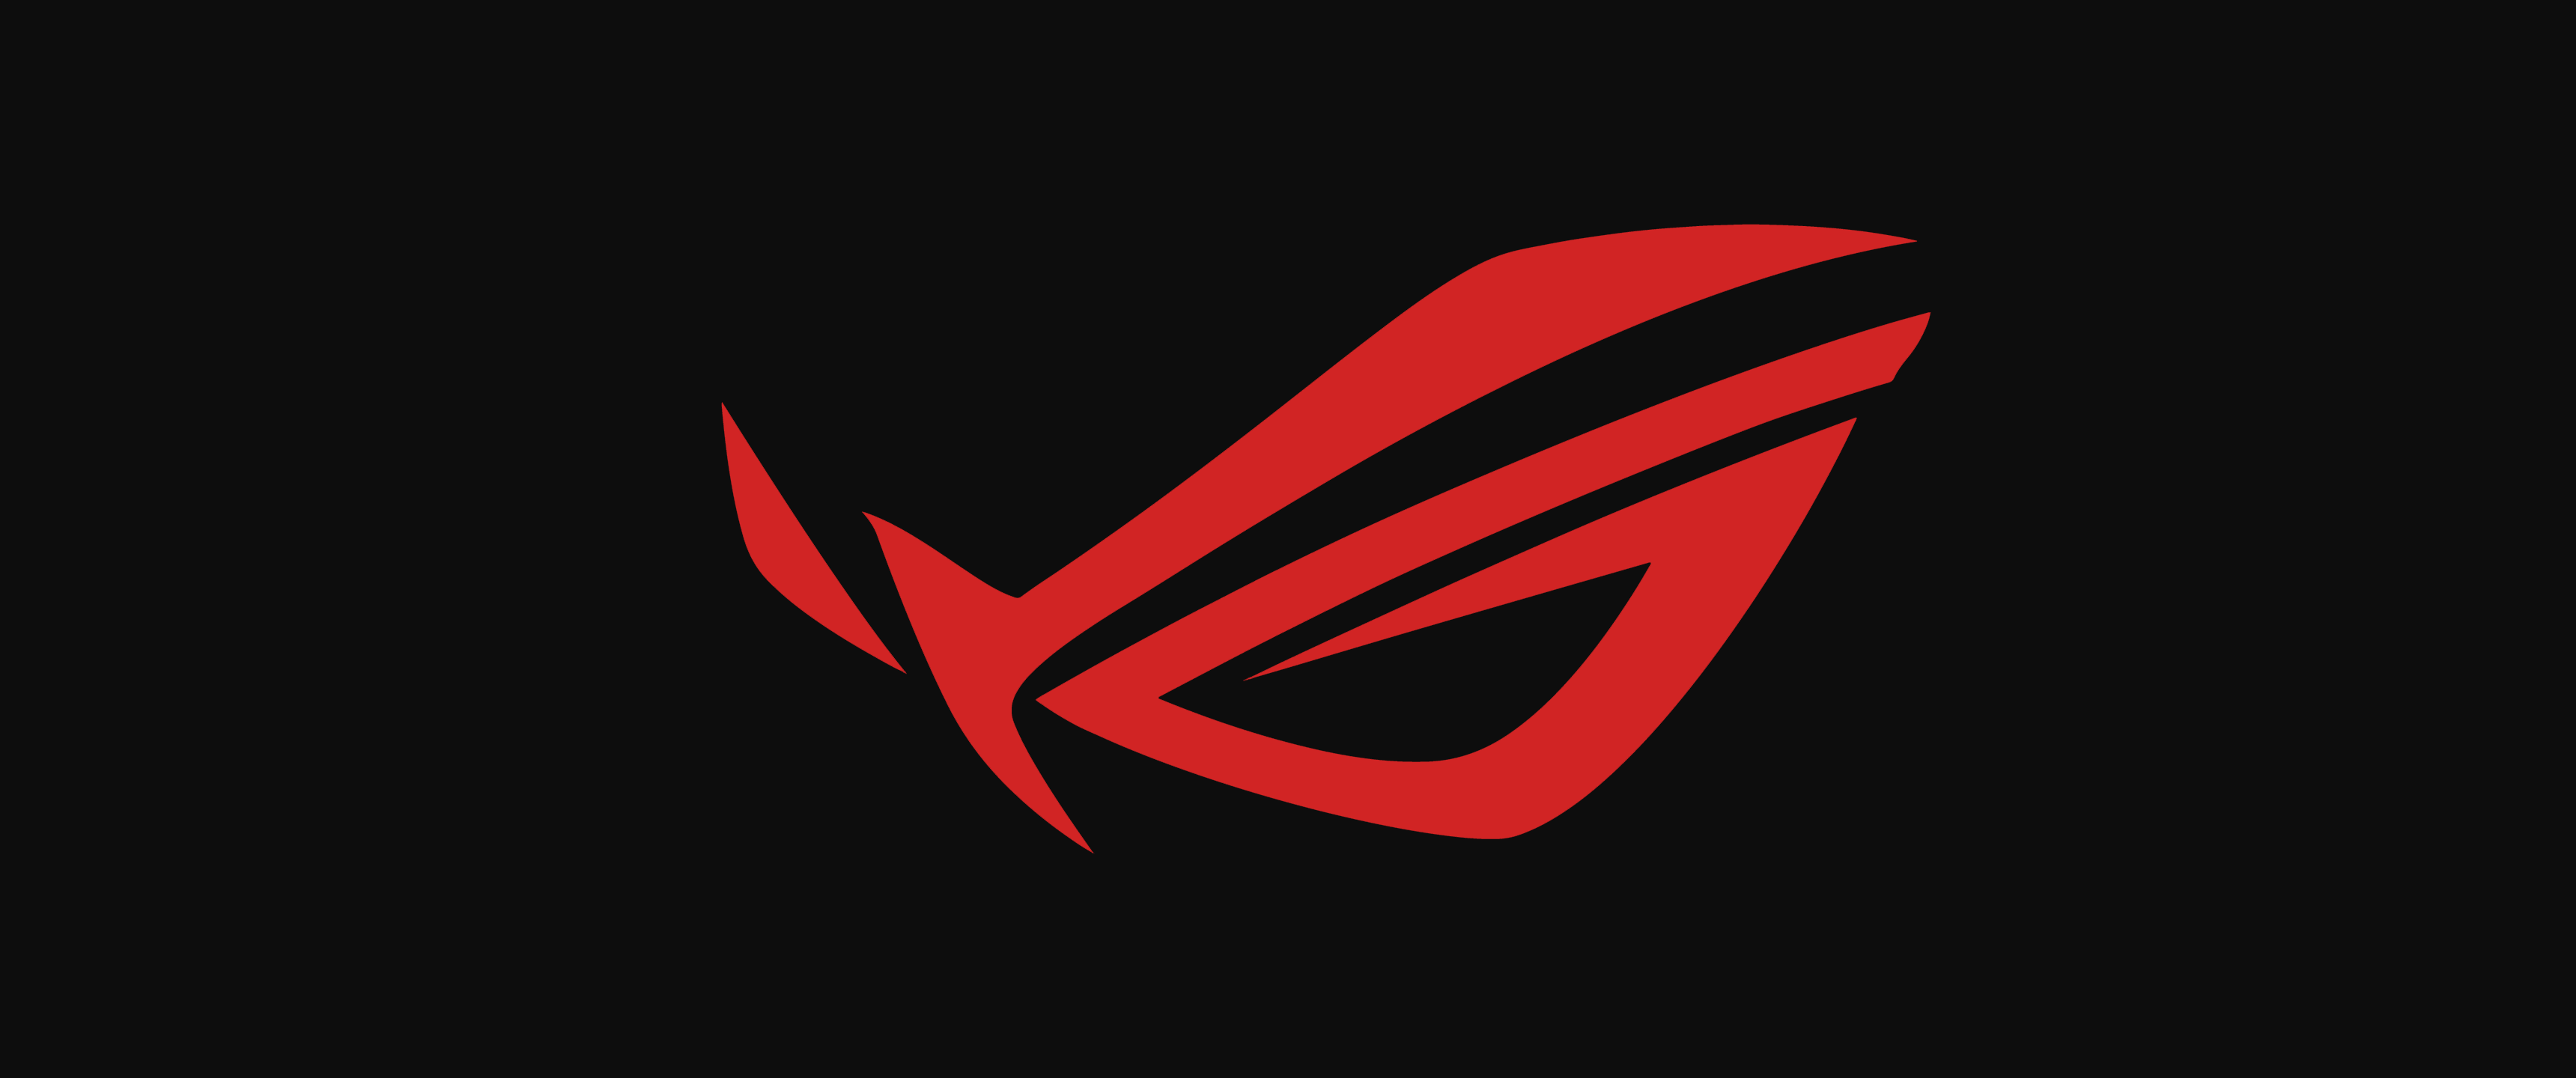 Rog Logo - Minimalistic ASUS ROG logo